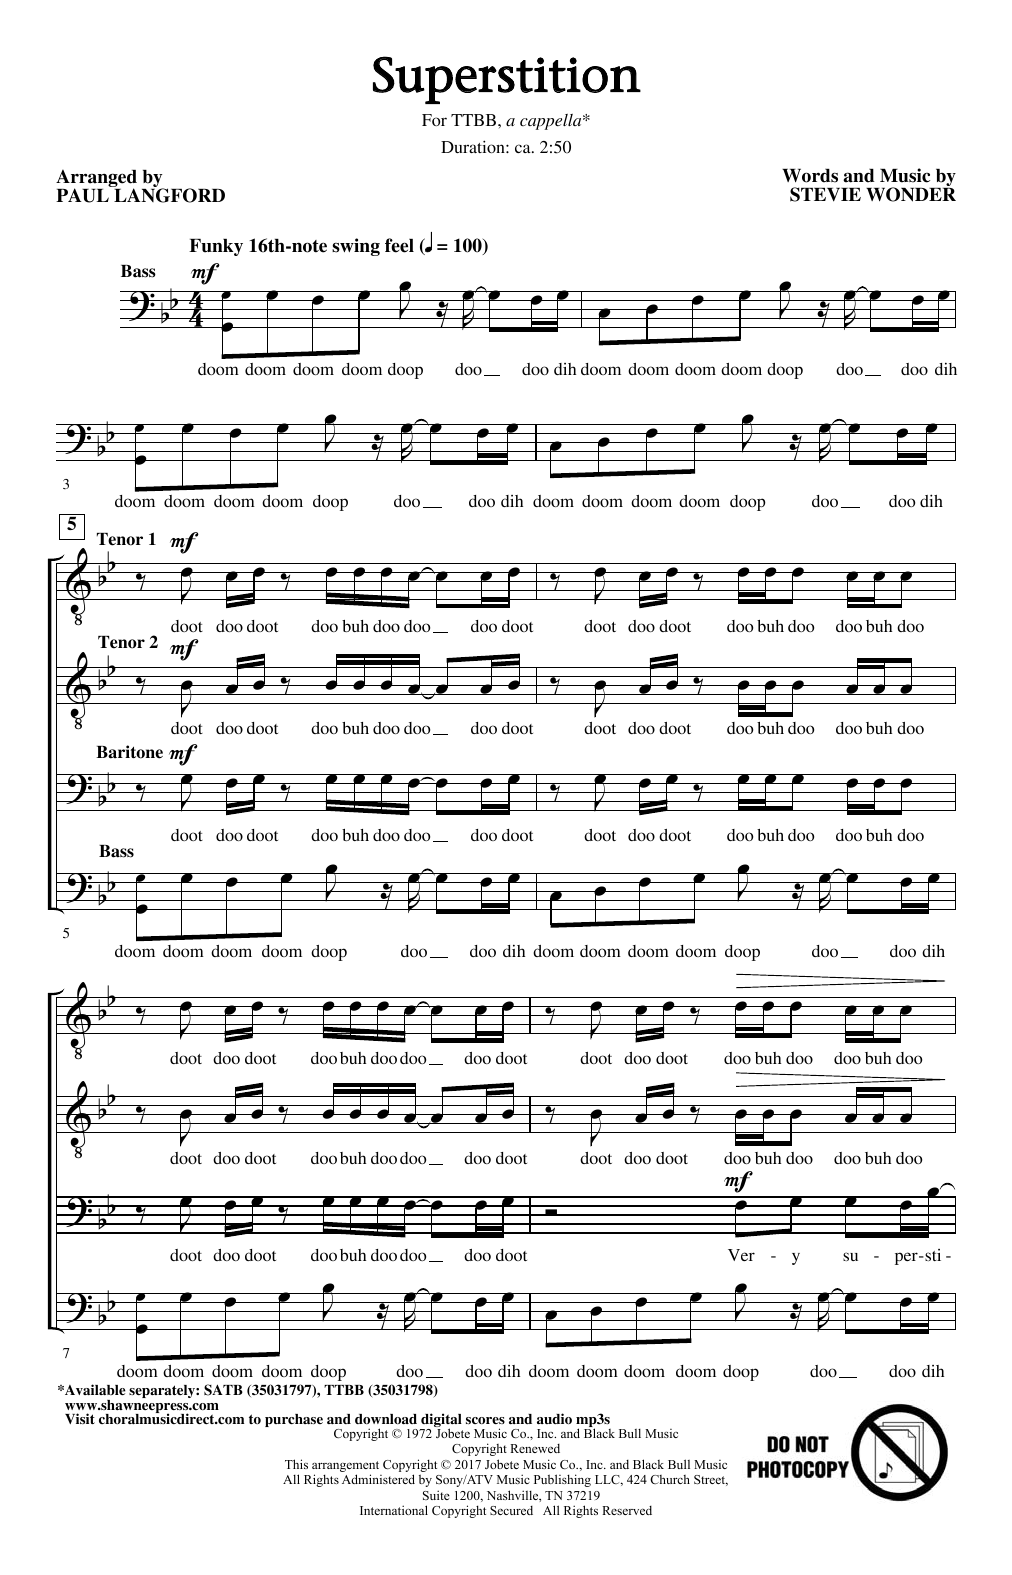 Stevie Wonder Superstition (arr. Paul Langford) Sheet Music Notes & Chords for SATB - Download or Print PDF